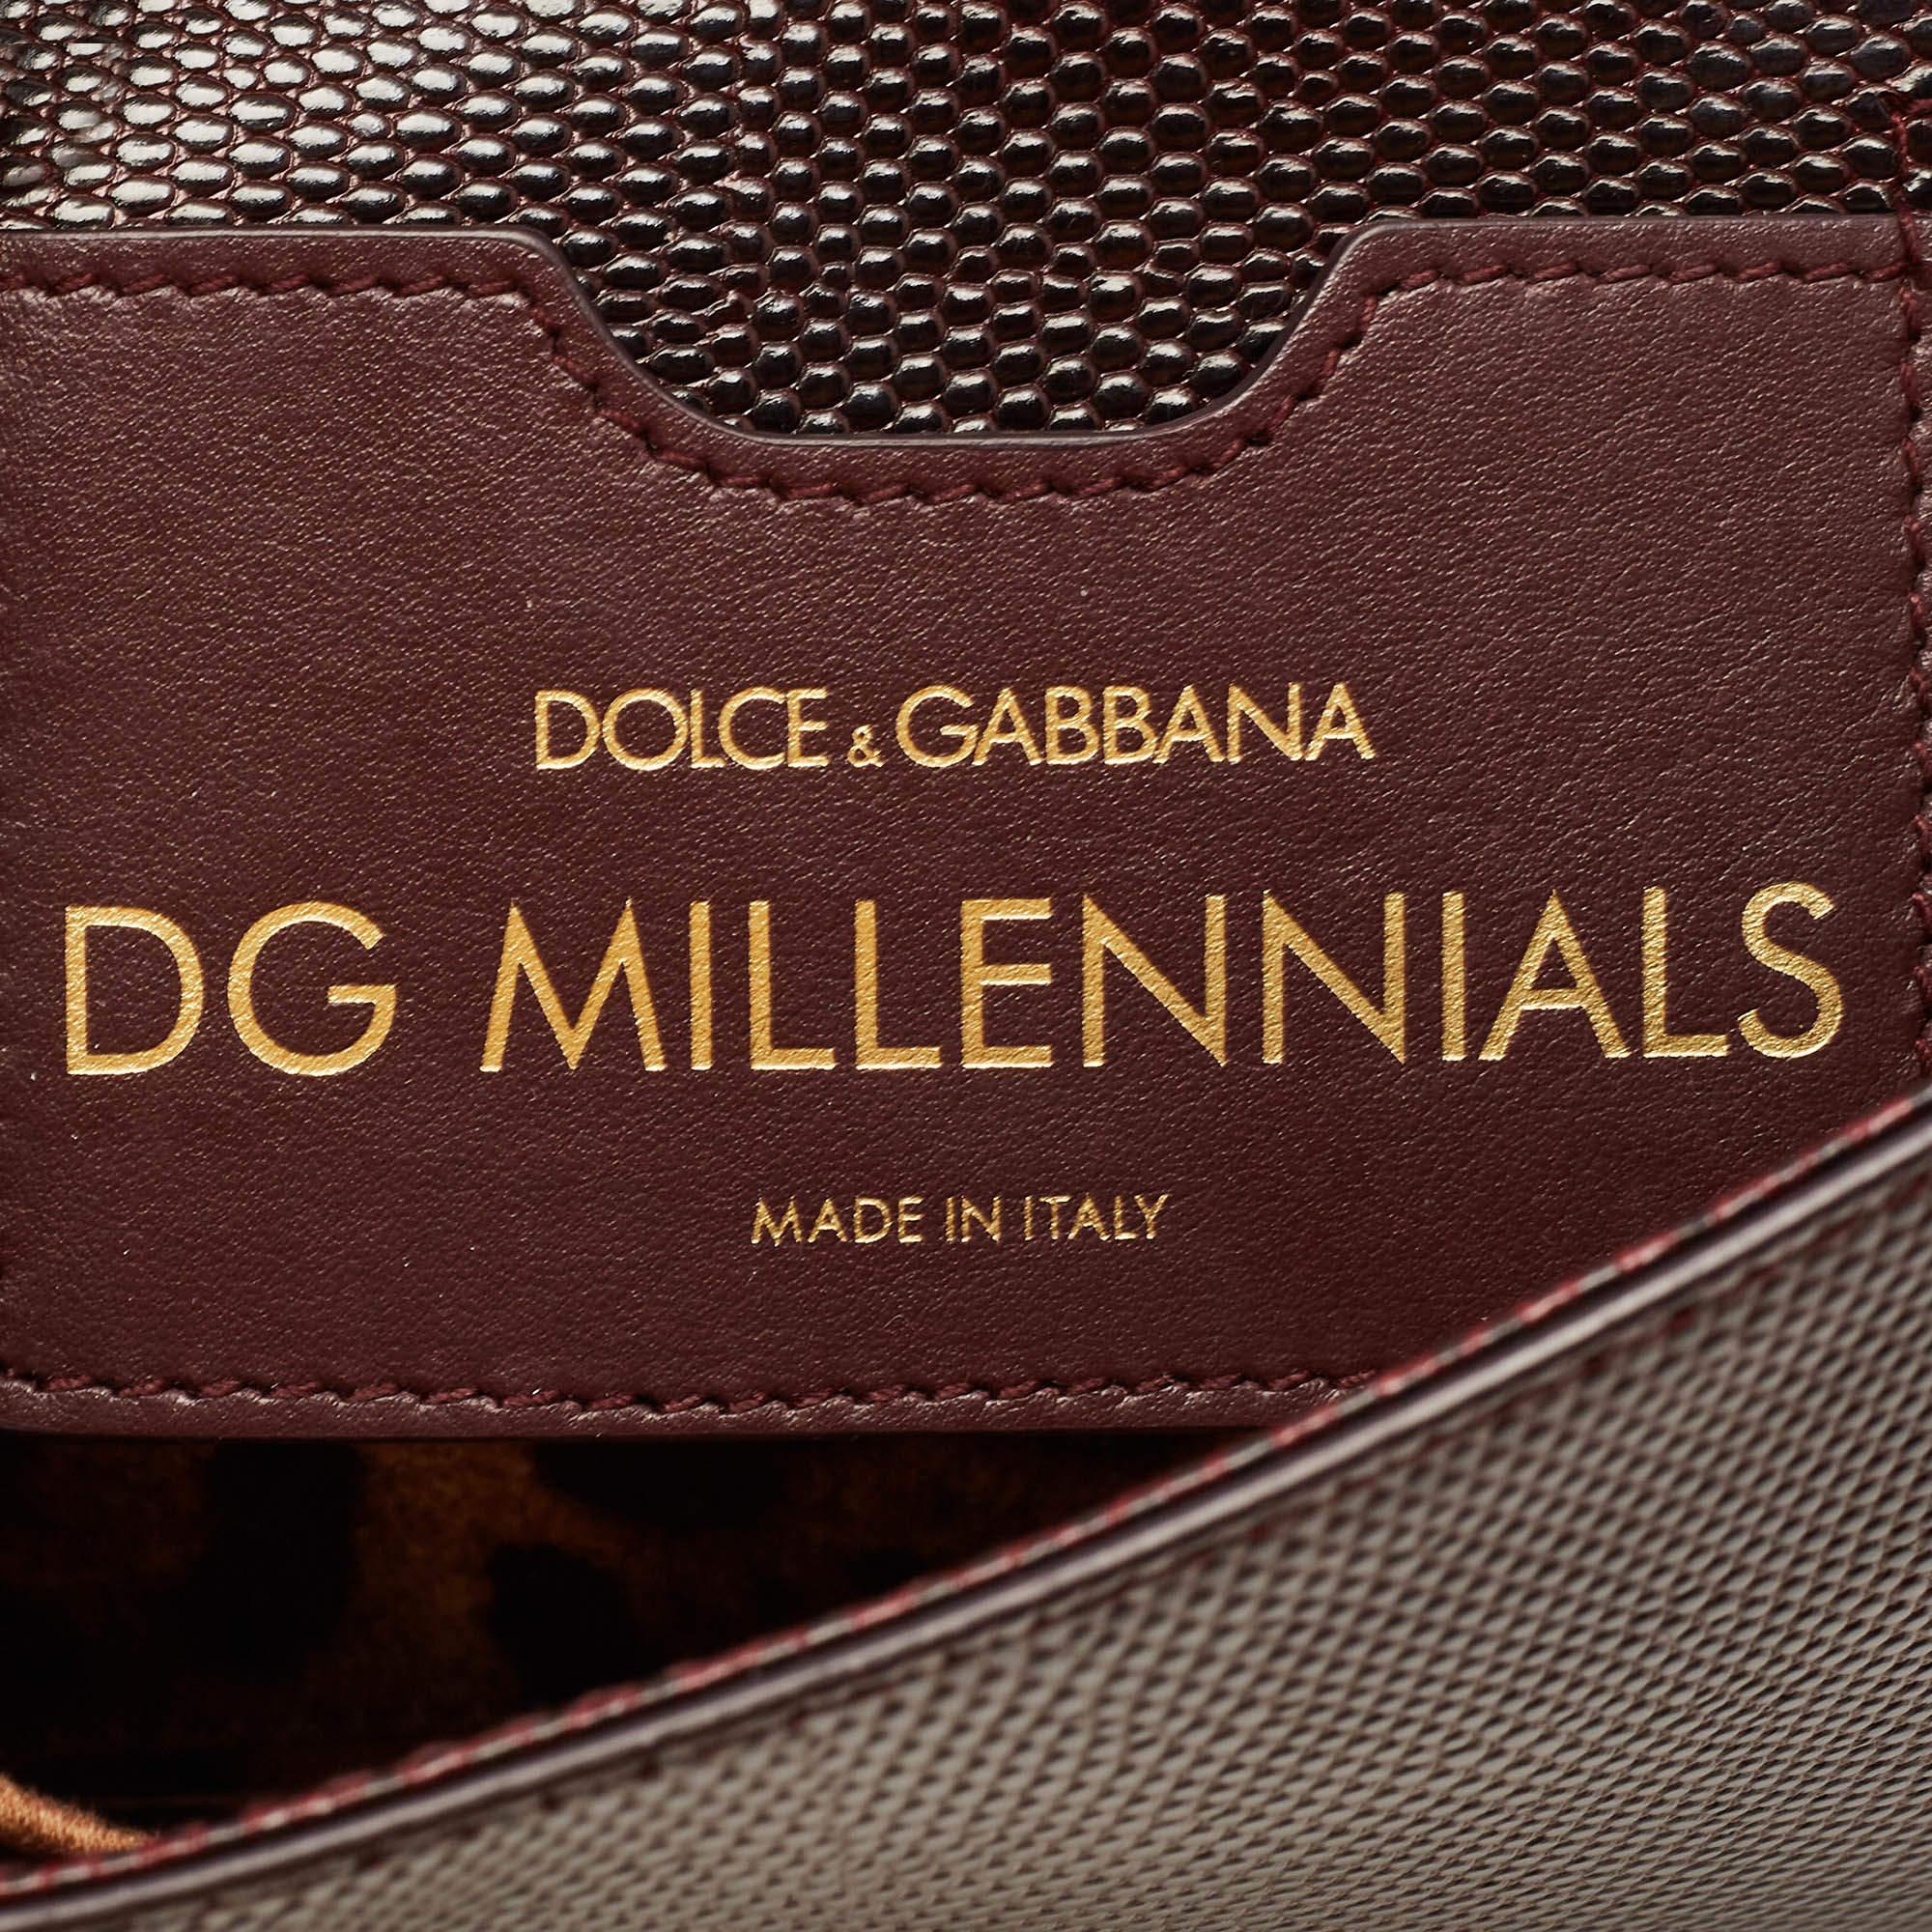 Dolce & Gabbana Dark Burgundy Lizard Embossed Leather DG Millennials Shoulder Ba 1